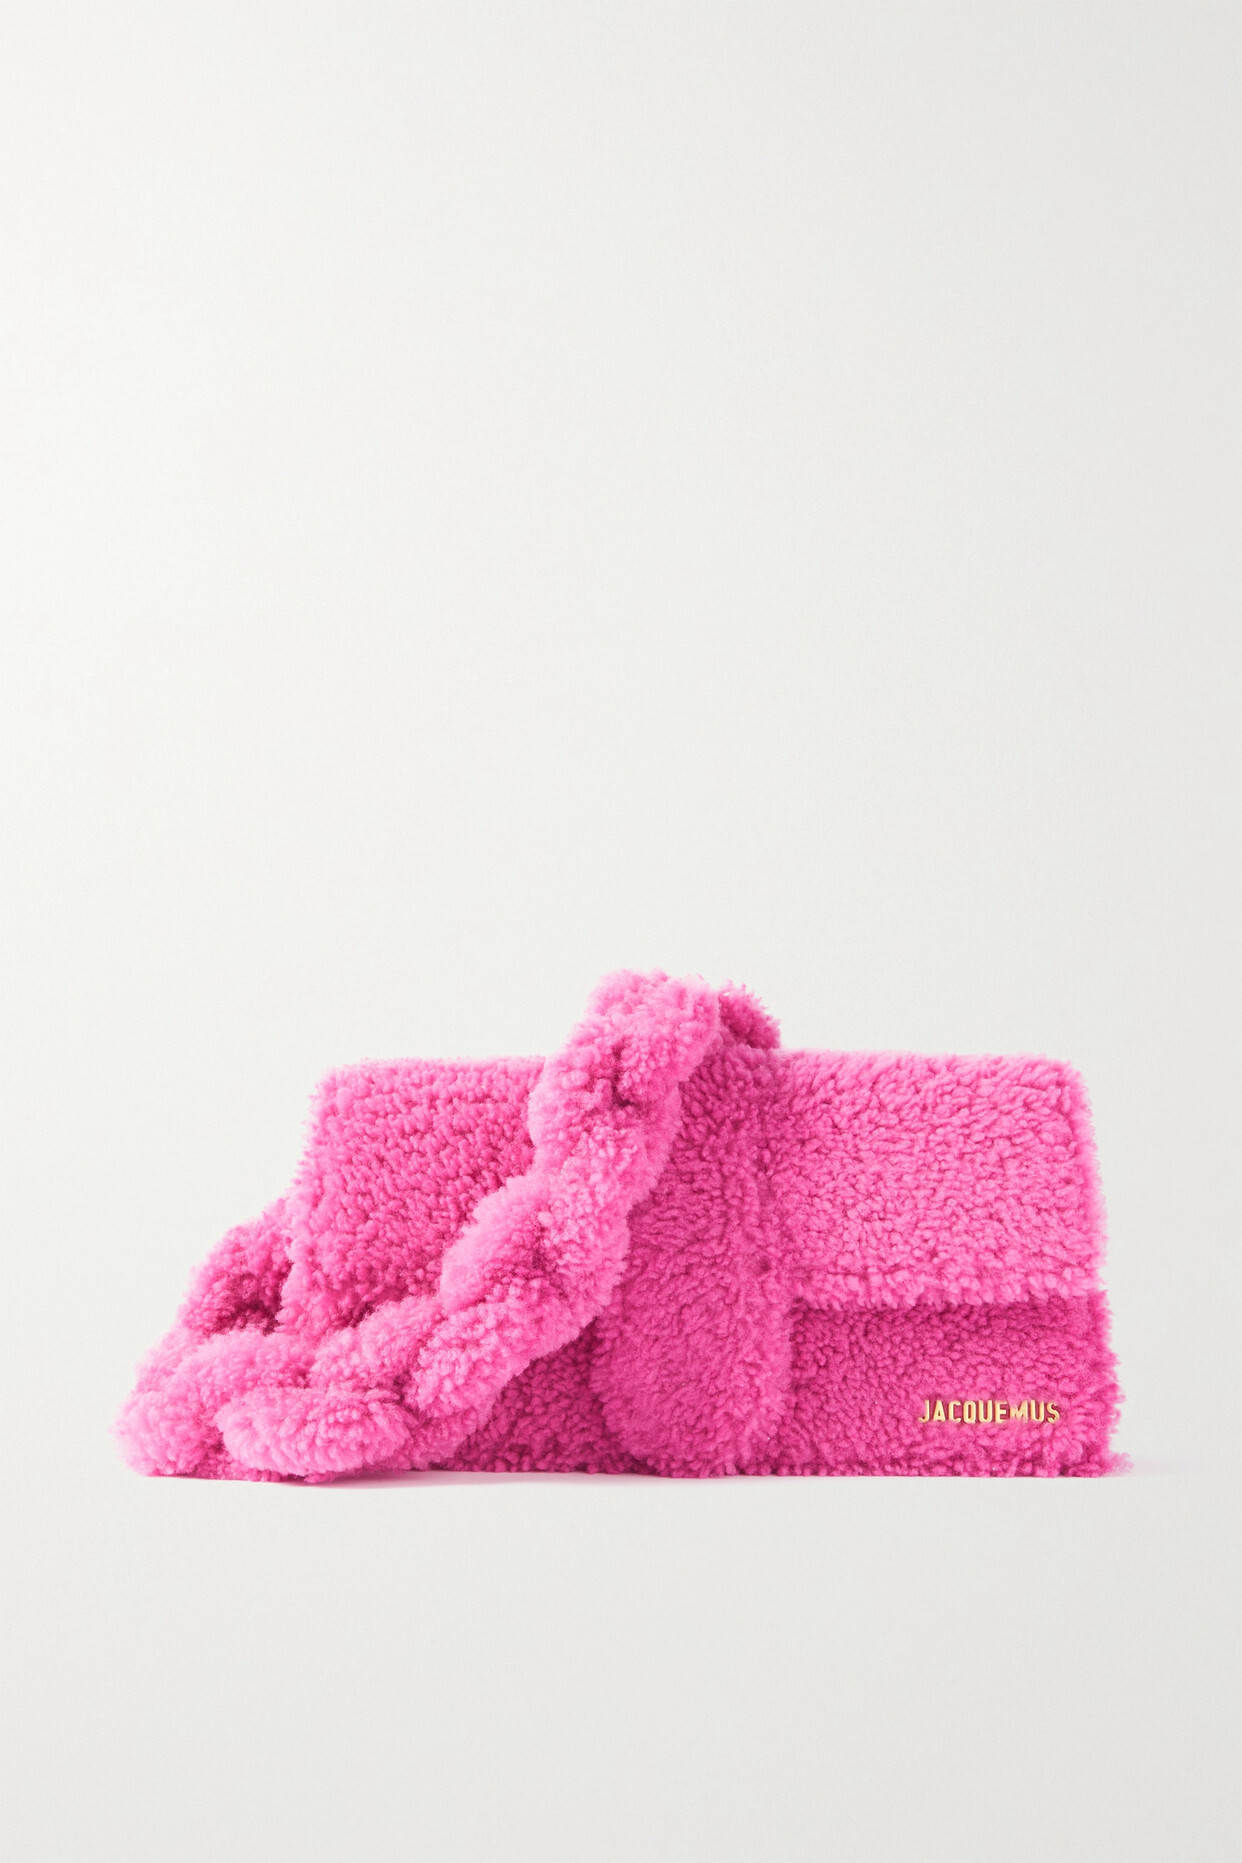 Jacquemus - Le Bambidou Shearling Shoulder Bag - Pink